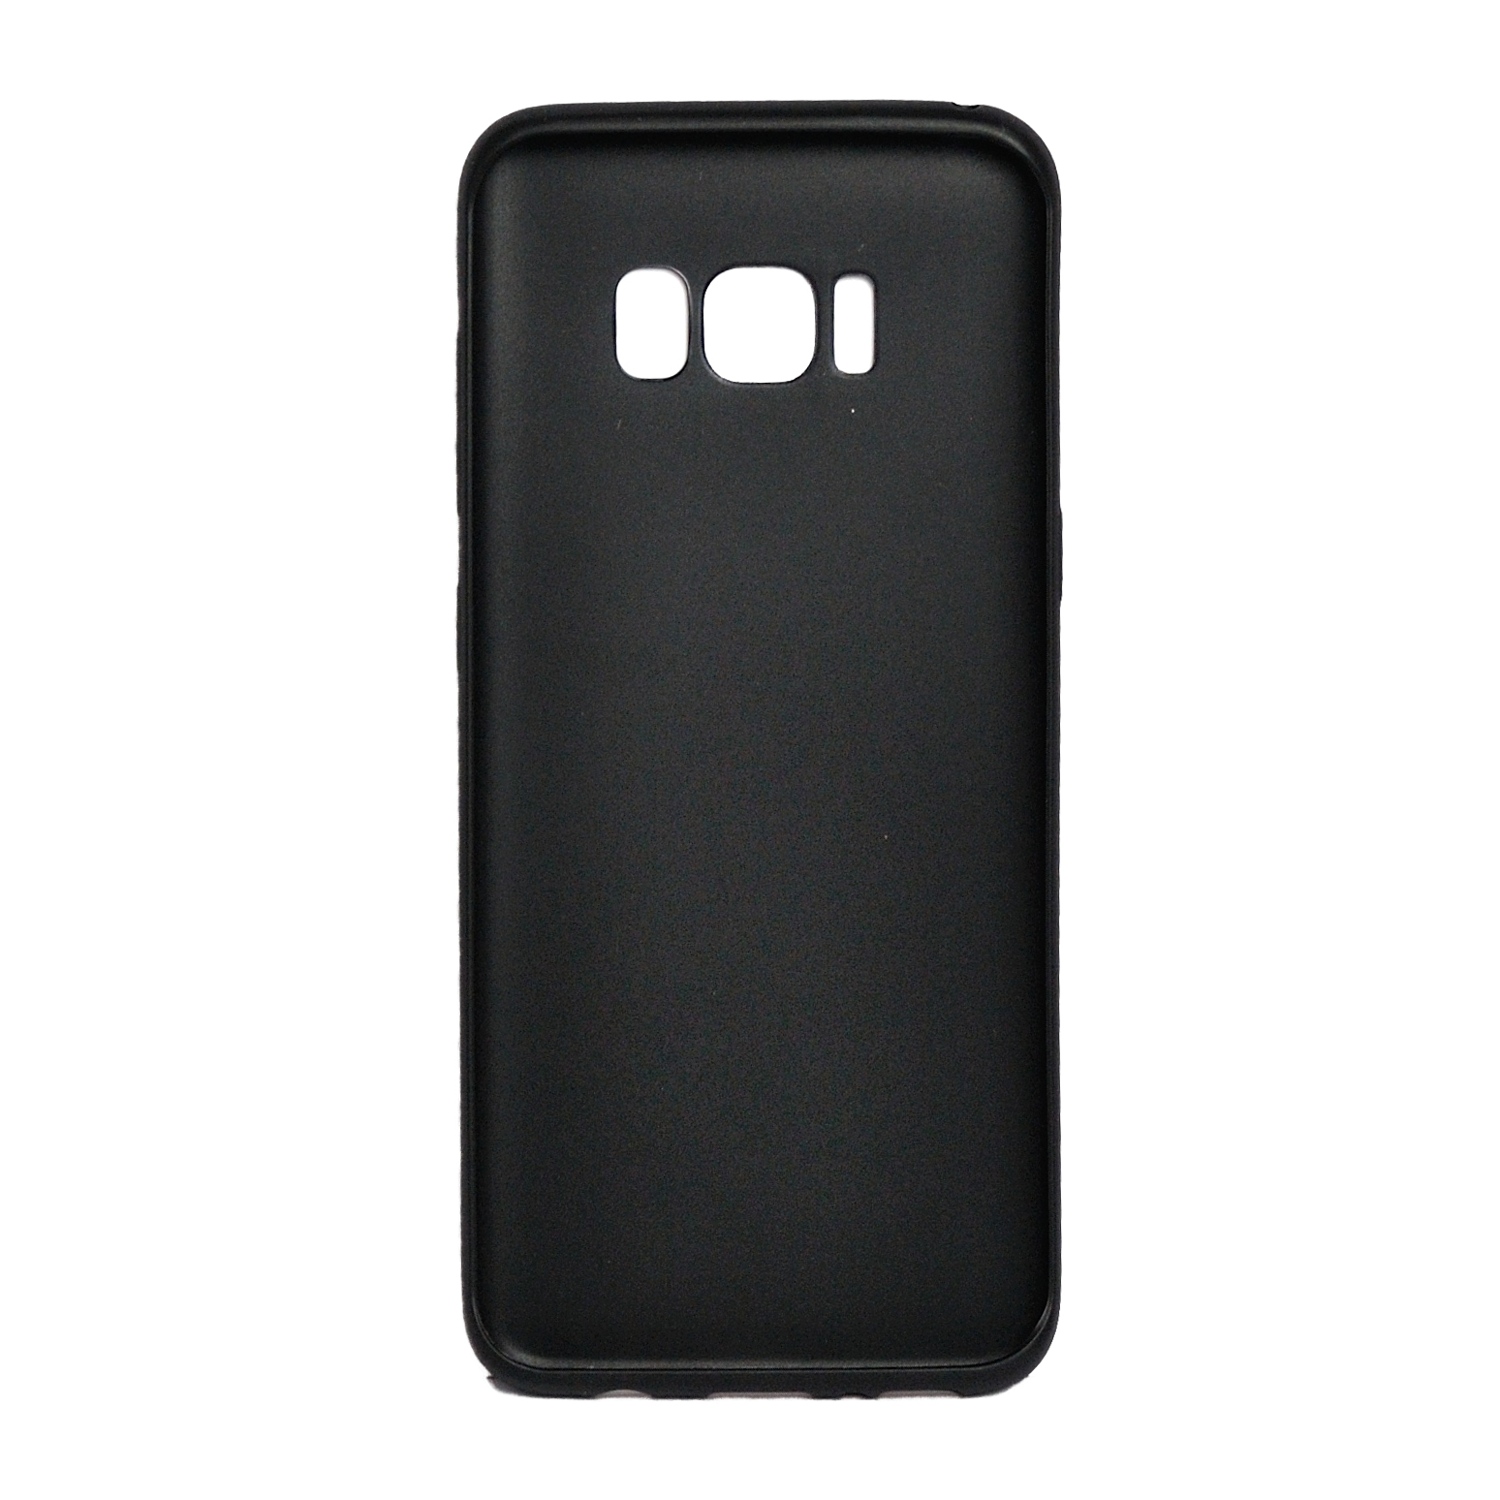 Husa Samsung S8 Spacer, negru, grosime 1 mm, material flexibil TPU, ColorFull Matt Ultra negru „SPT-MUT-SA.S8”